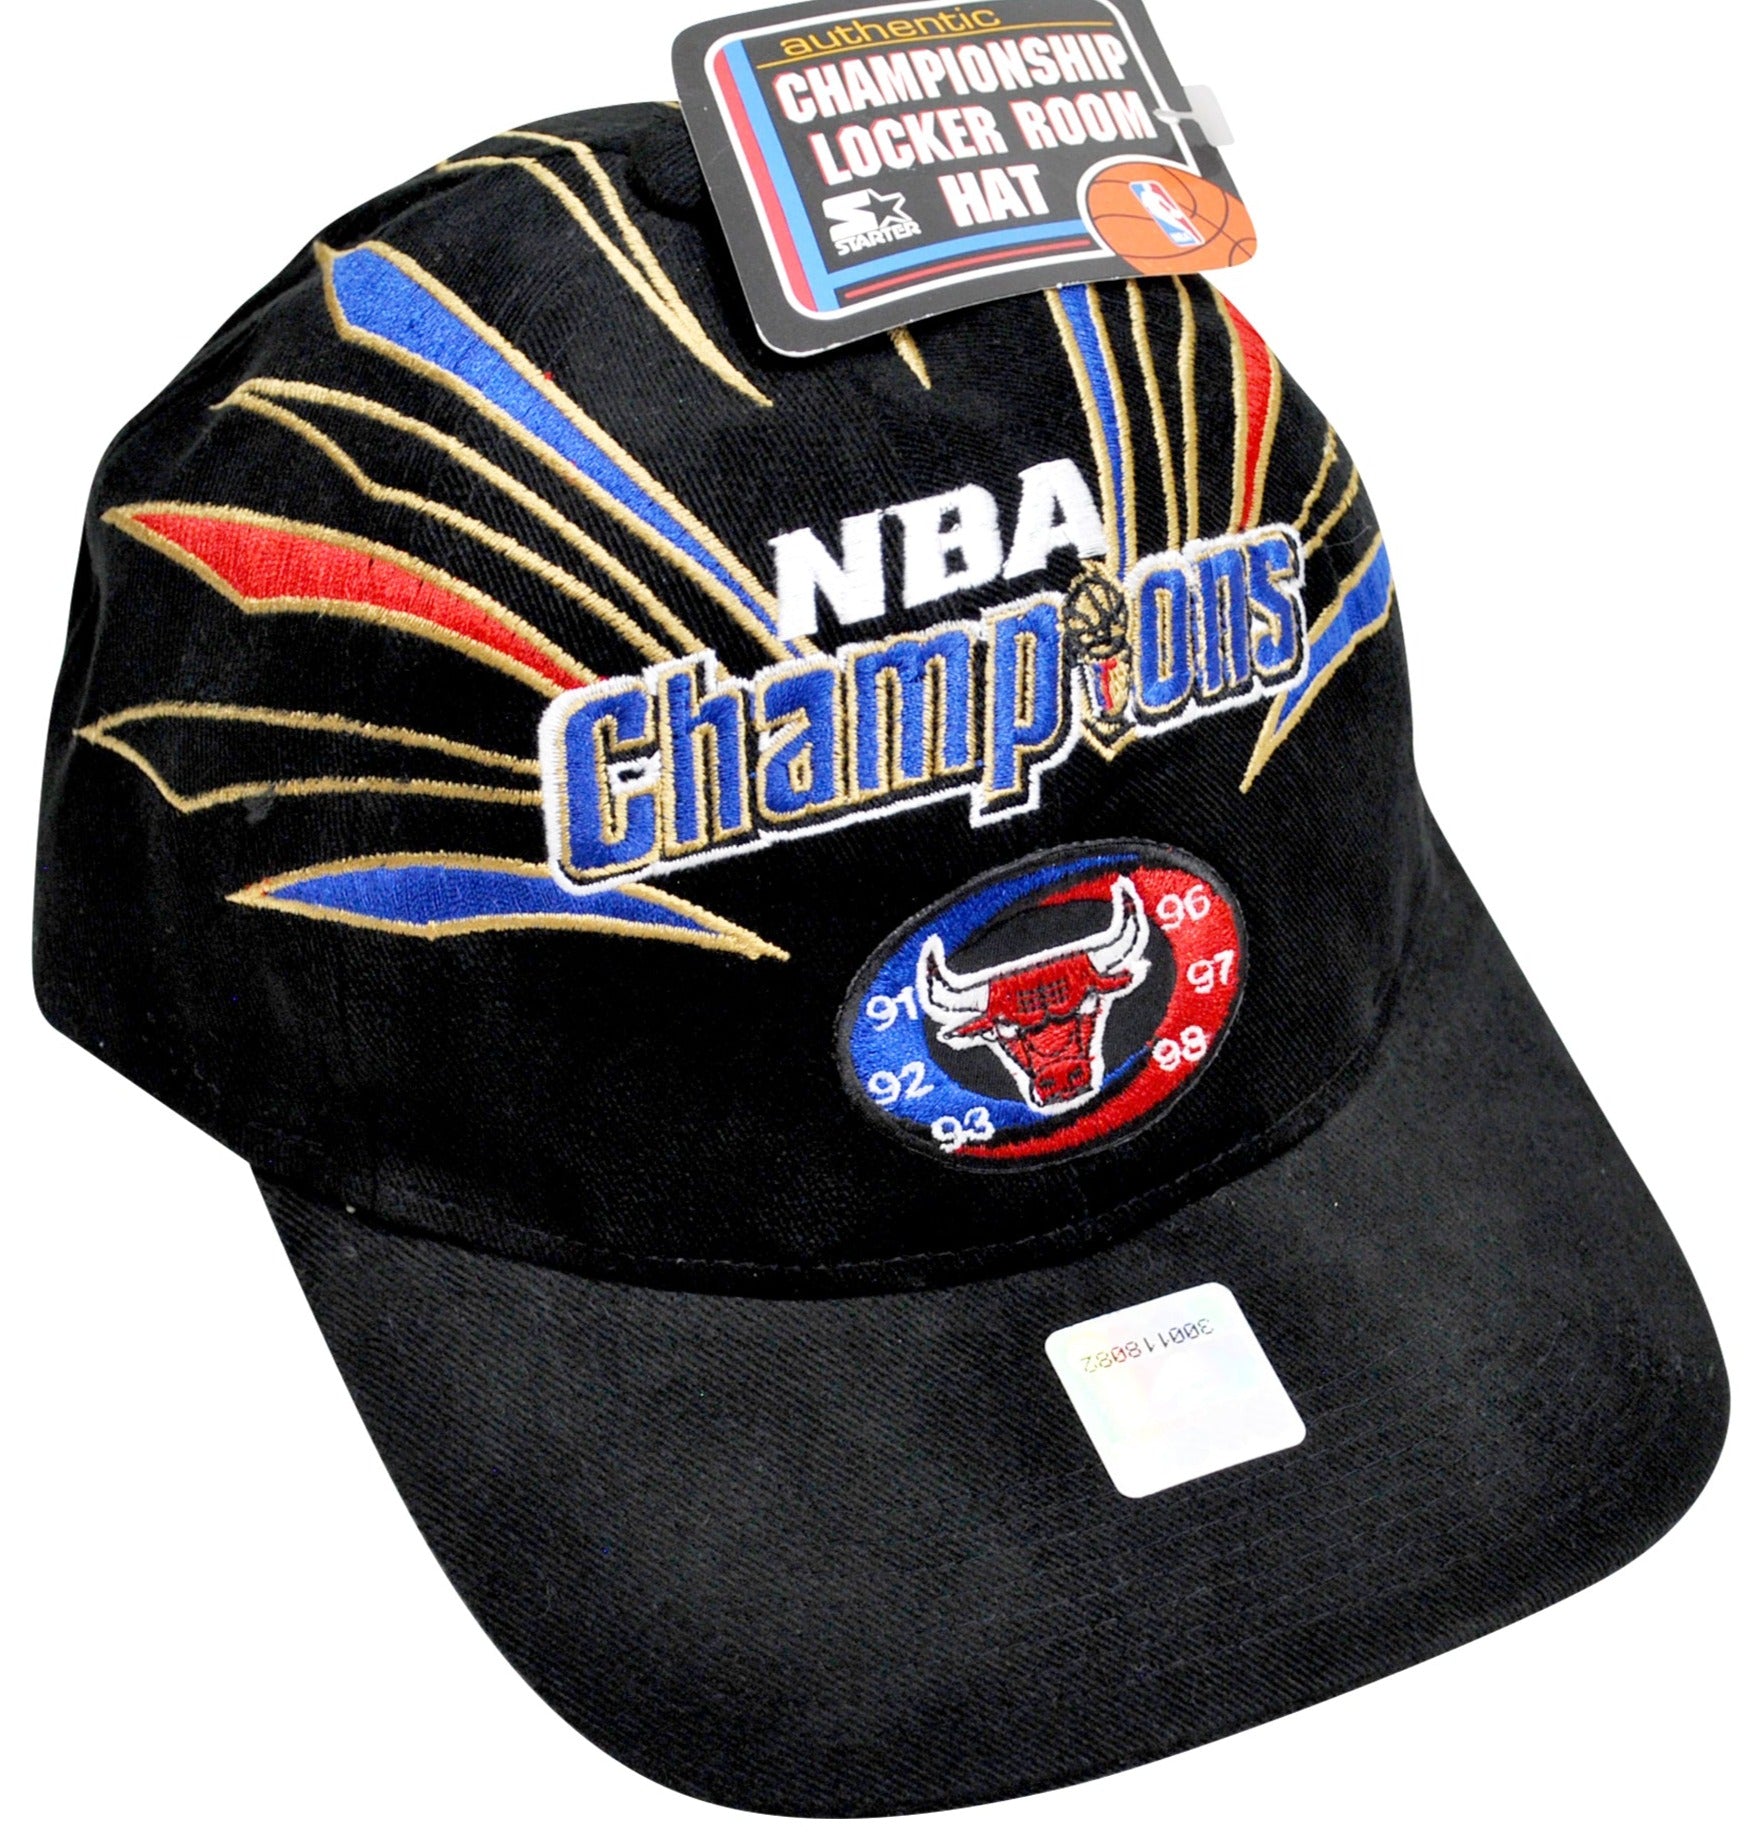 1998 Chicago Bulls Championship Locker Room Hat Starter 1998